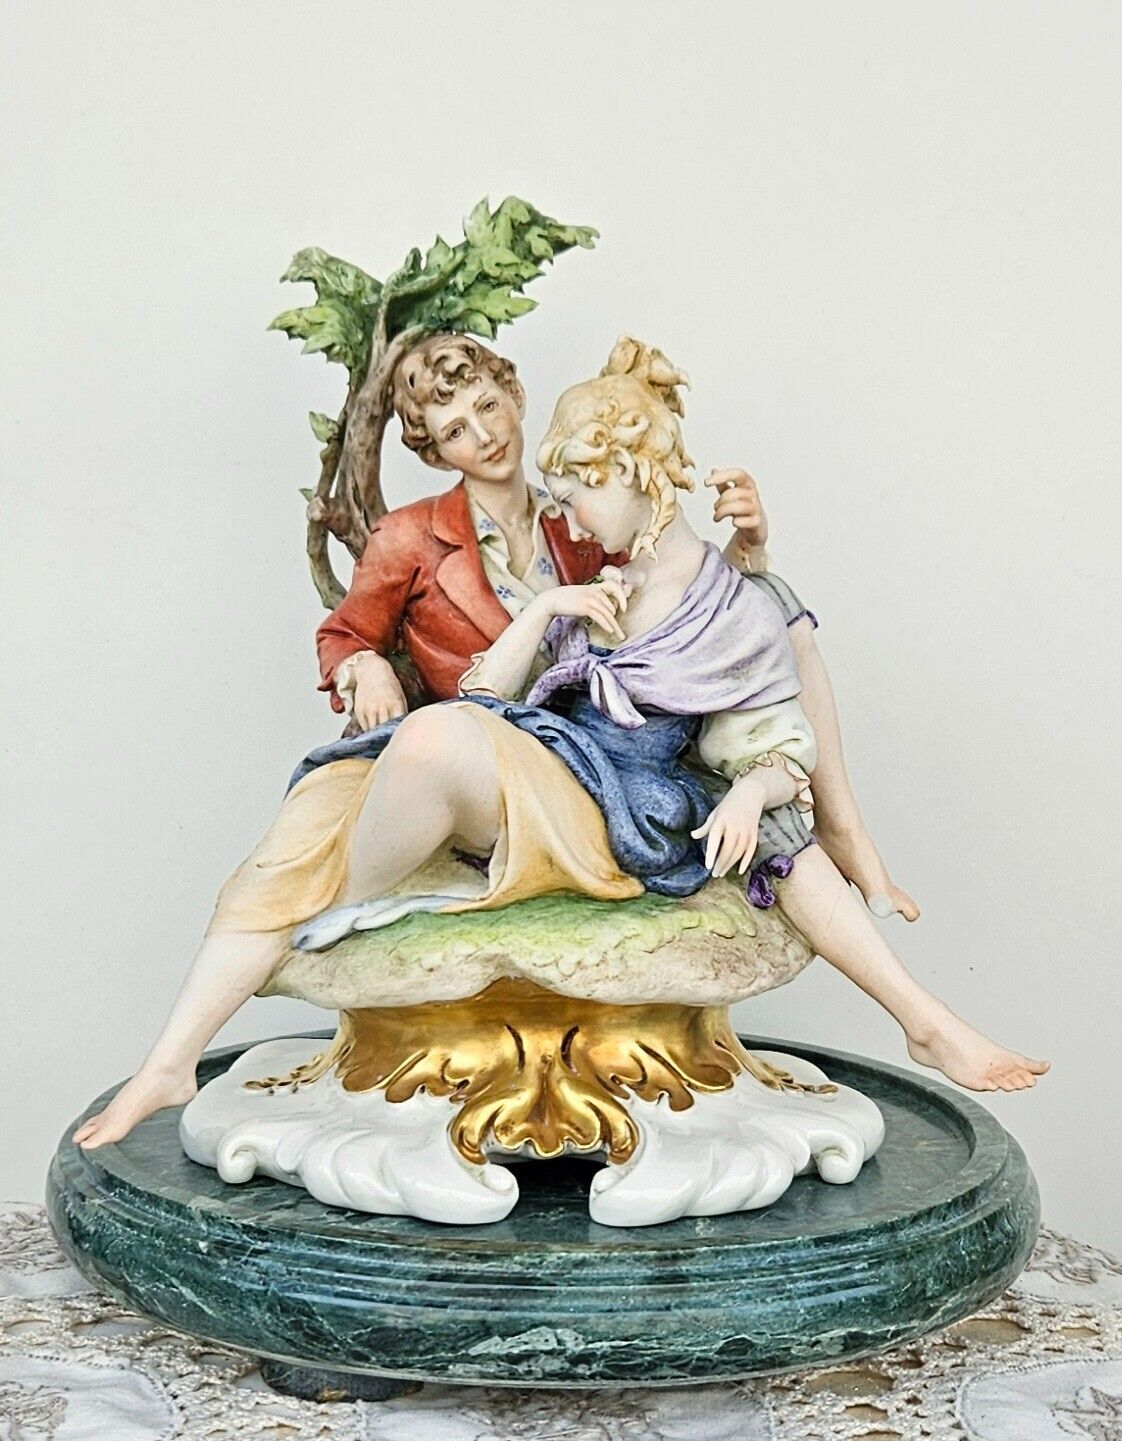 Capodimonte porcelain figurine Giuseppe Cappe G Calle Couple in Love Italy 1961